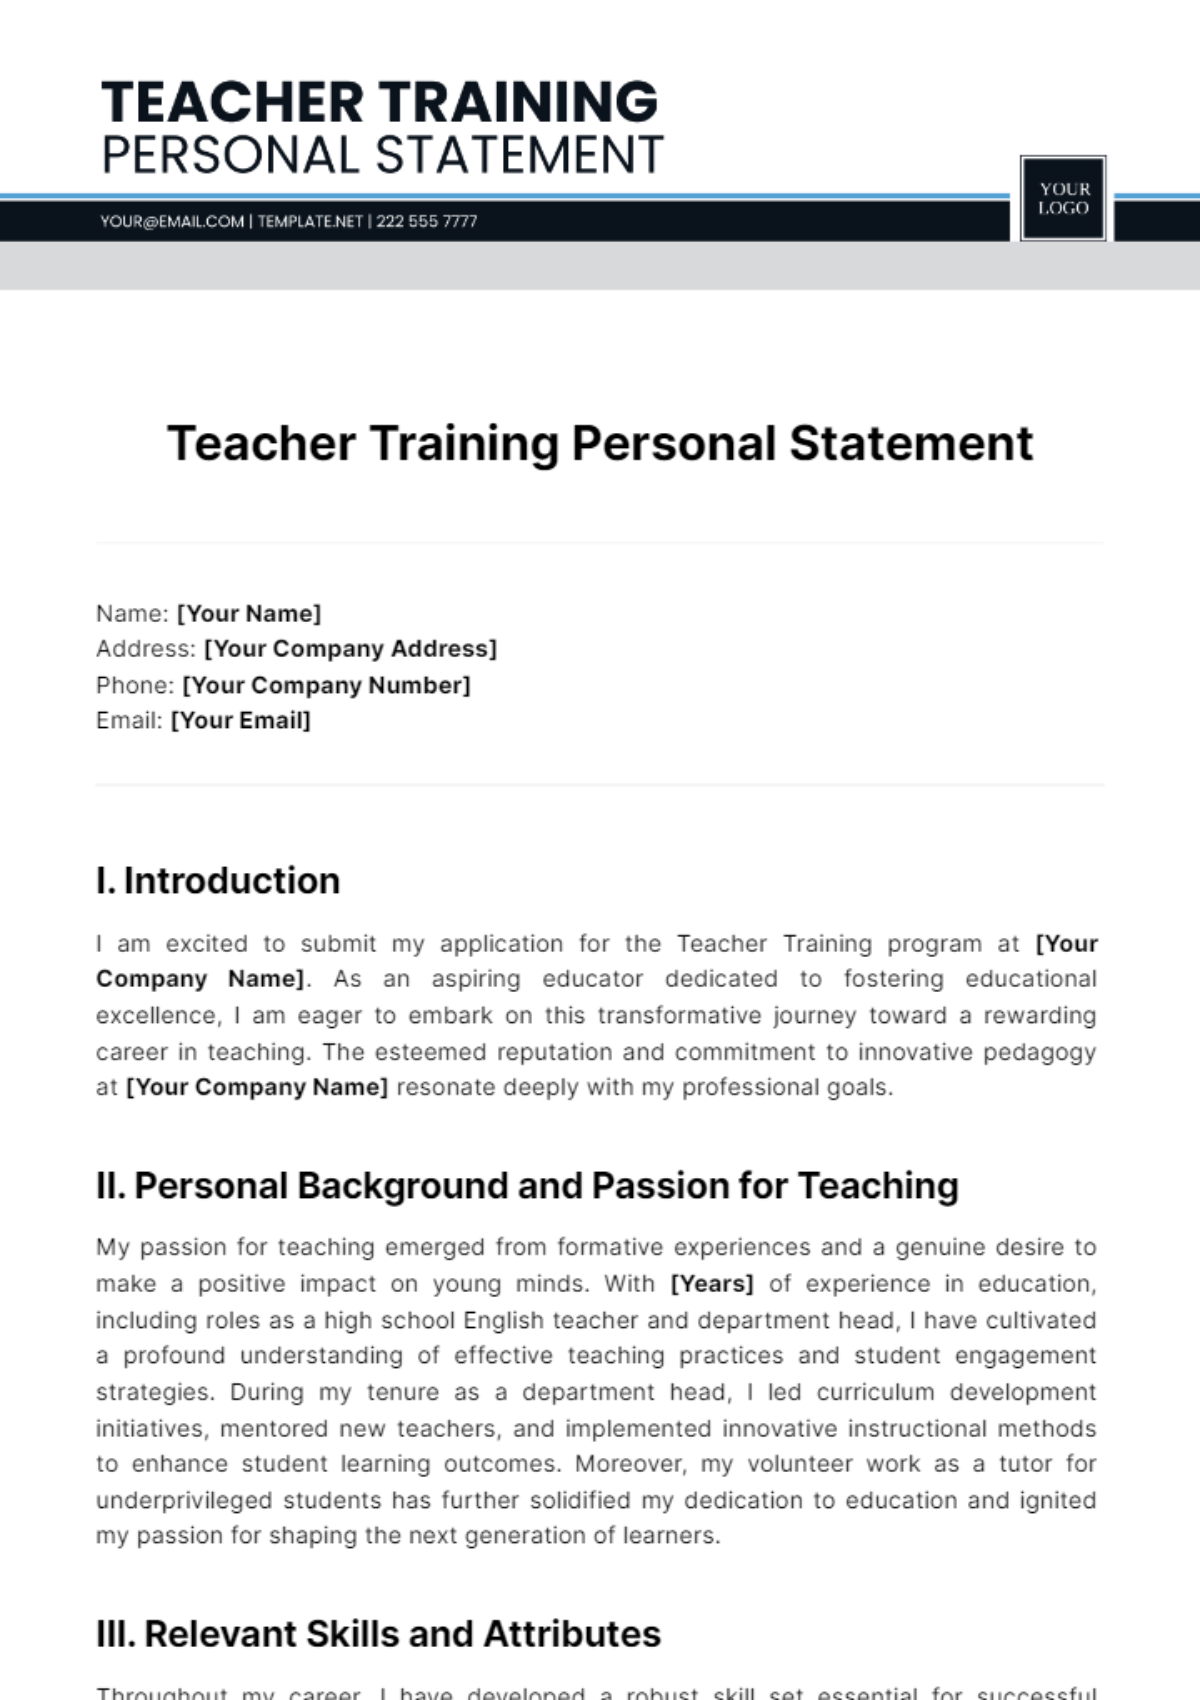 Teacher Traning Personal Statement Template